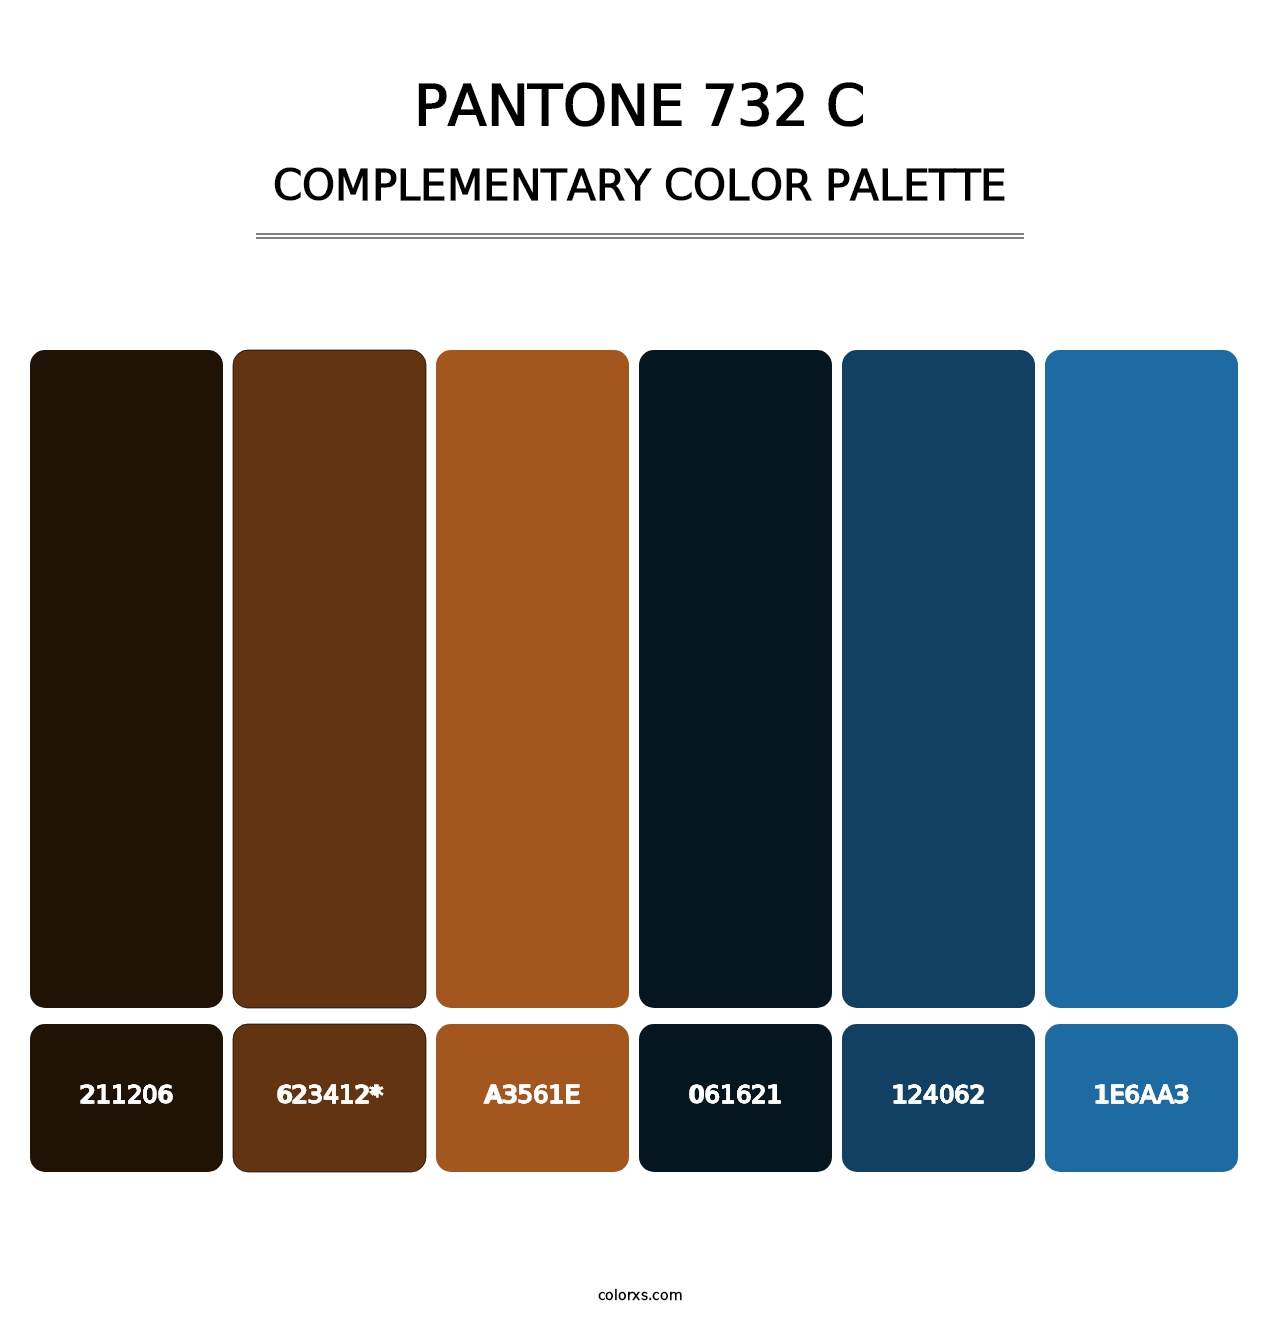 PANTONE 732 C - Complementary Color Palette